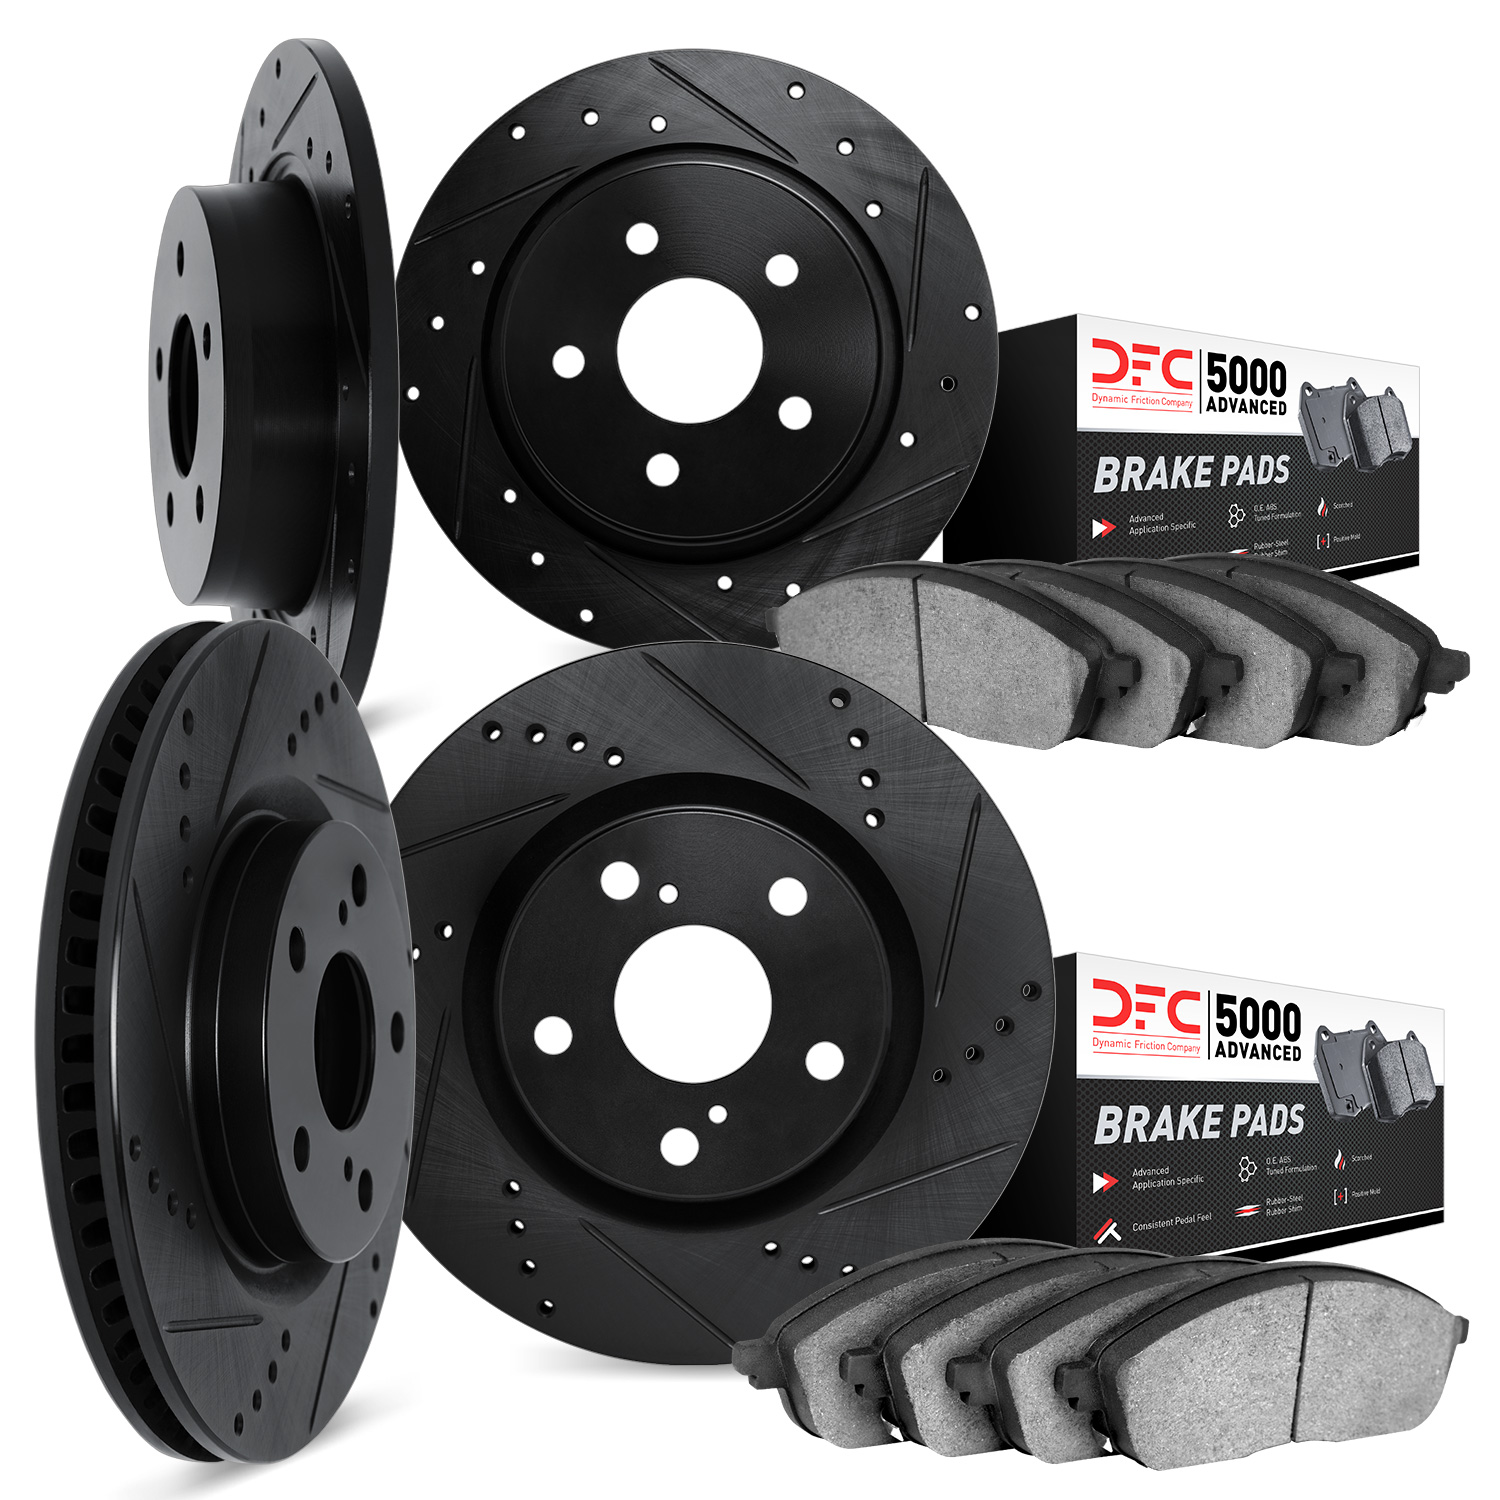 8504-39037 Drilled/Slotted Brake Rotors w/5000 Advanced Brake Pads Kit [Black], 2004-2008 Mopar, Position: Front and Rear